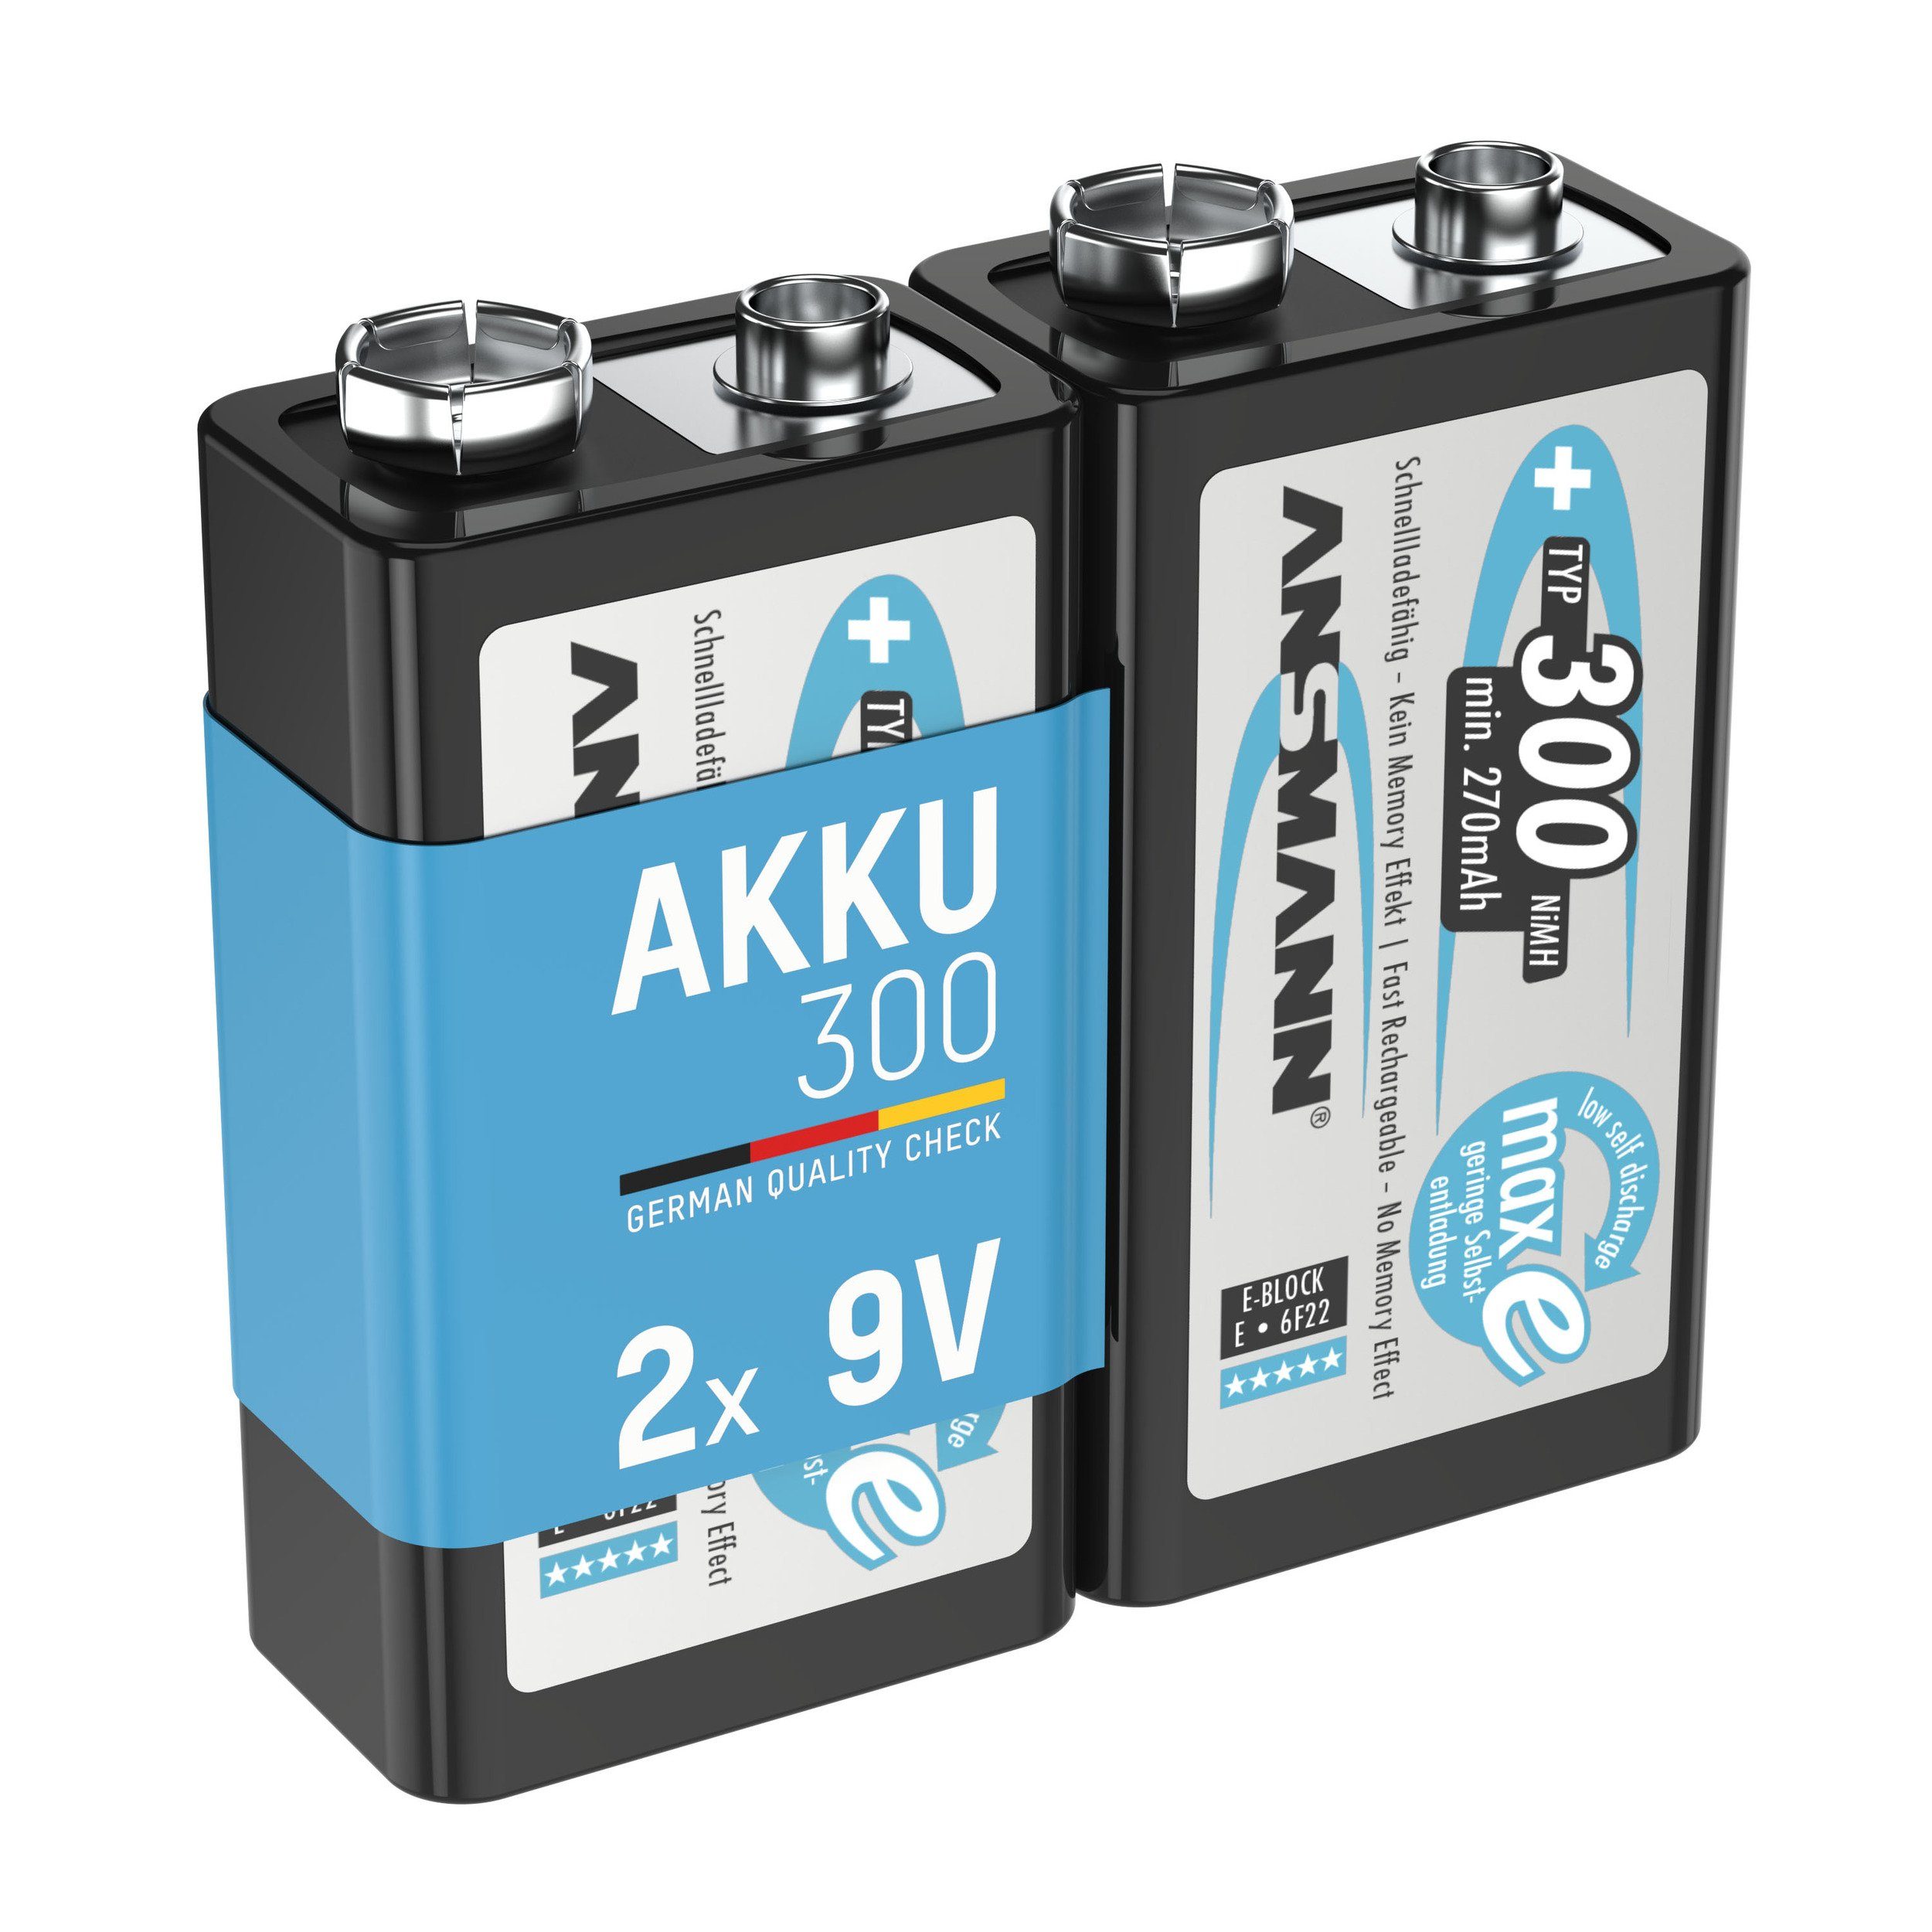 ANSMANN® Akku 9V 300mAh E-Block NiMH – 1000x wiederaufladbar (2 Stück) Akku 300 mAh (8.4 V)